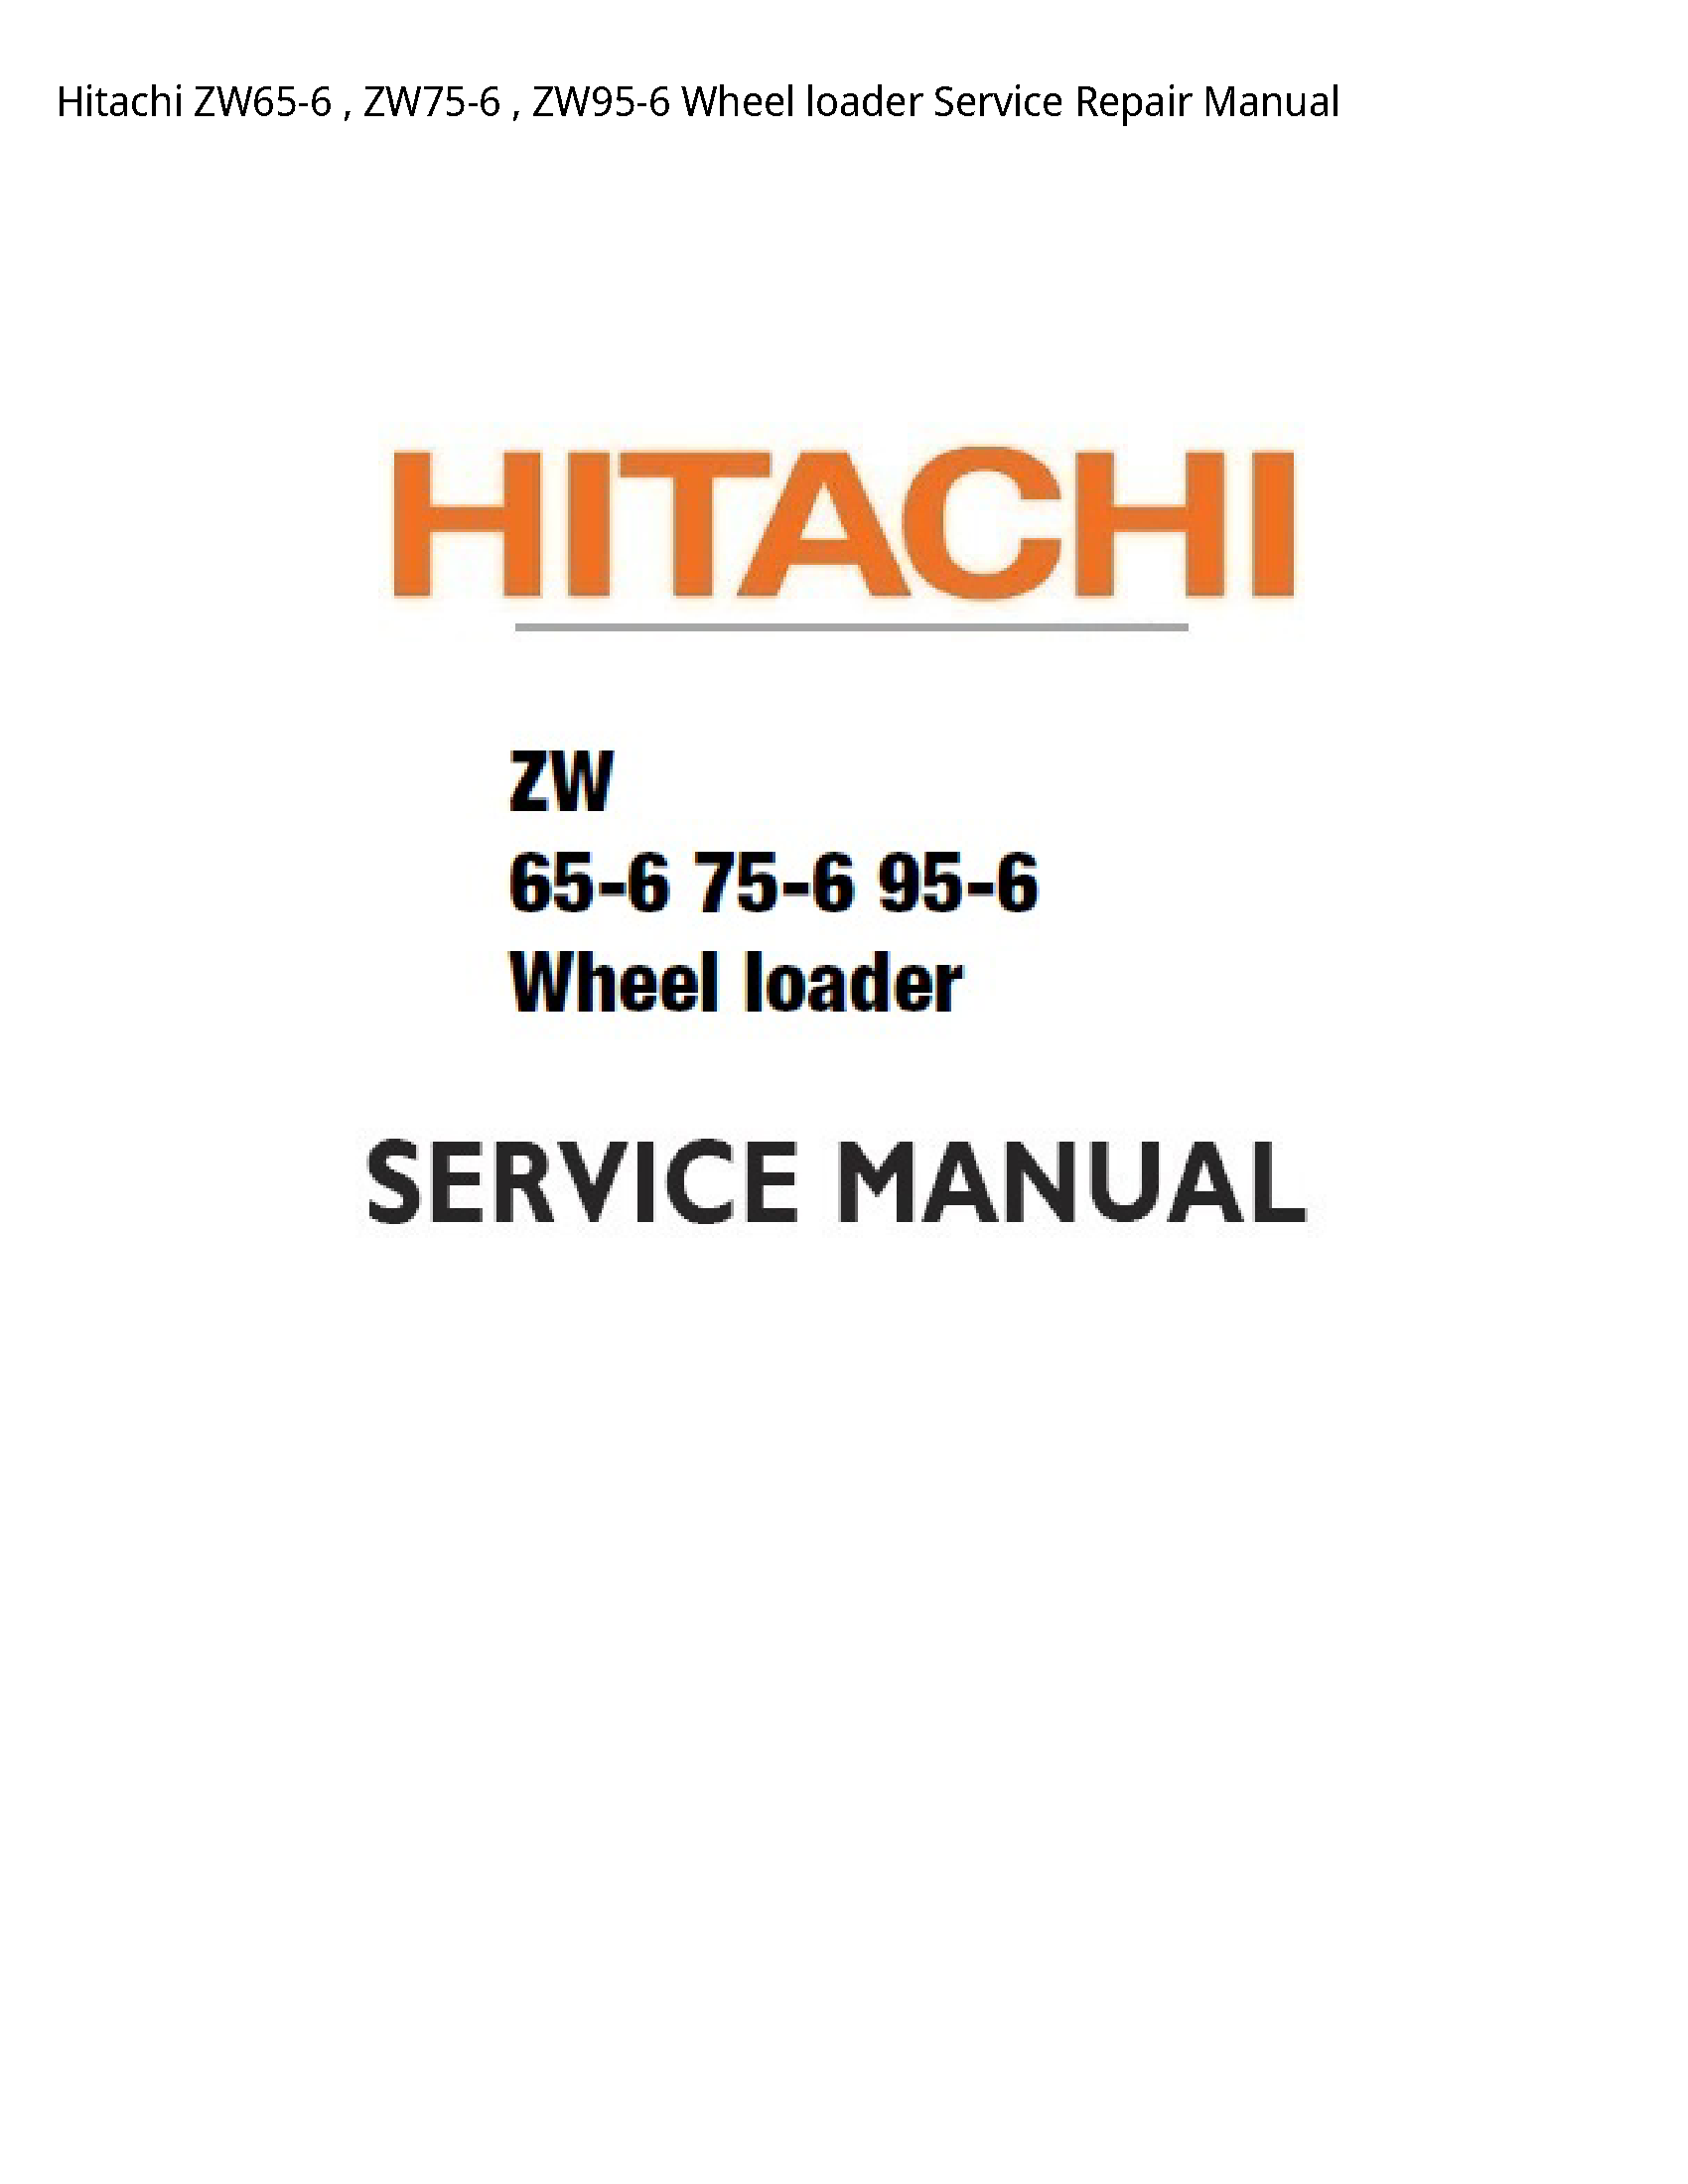 Hitachi ZW65-6 Wheel loader manual